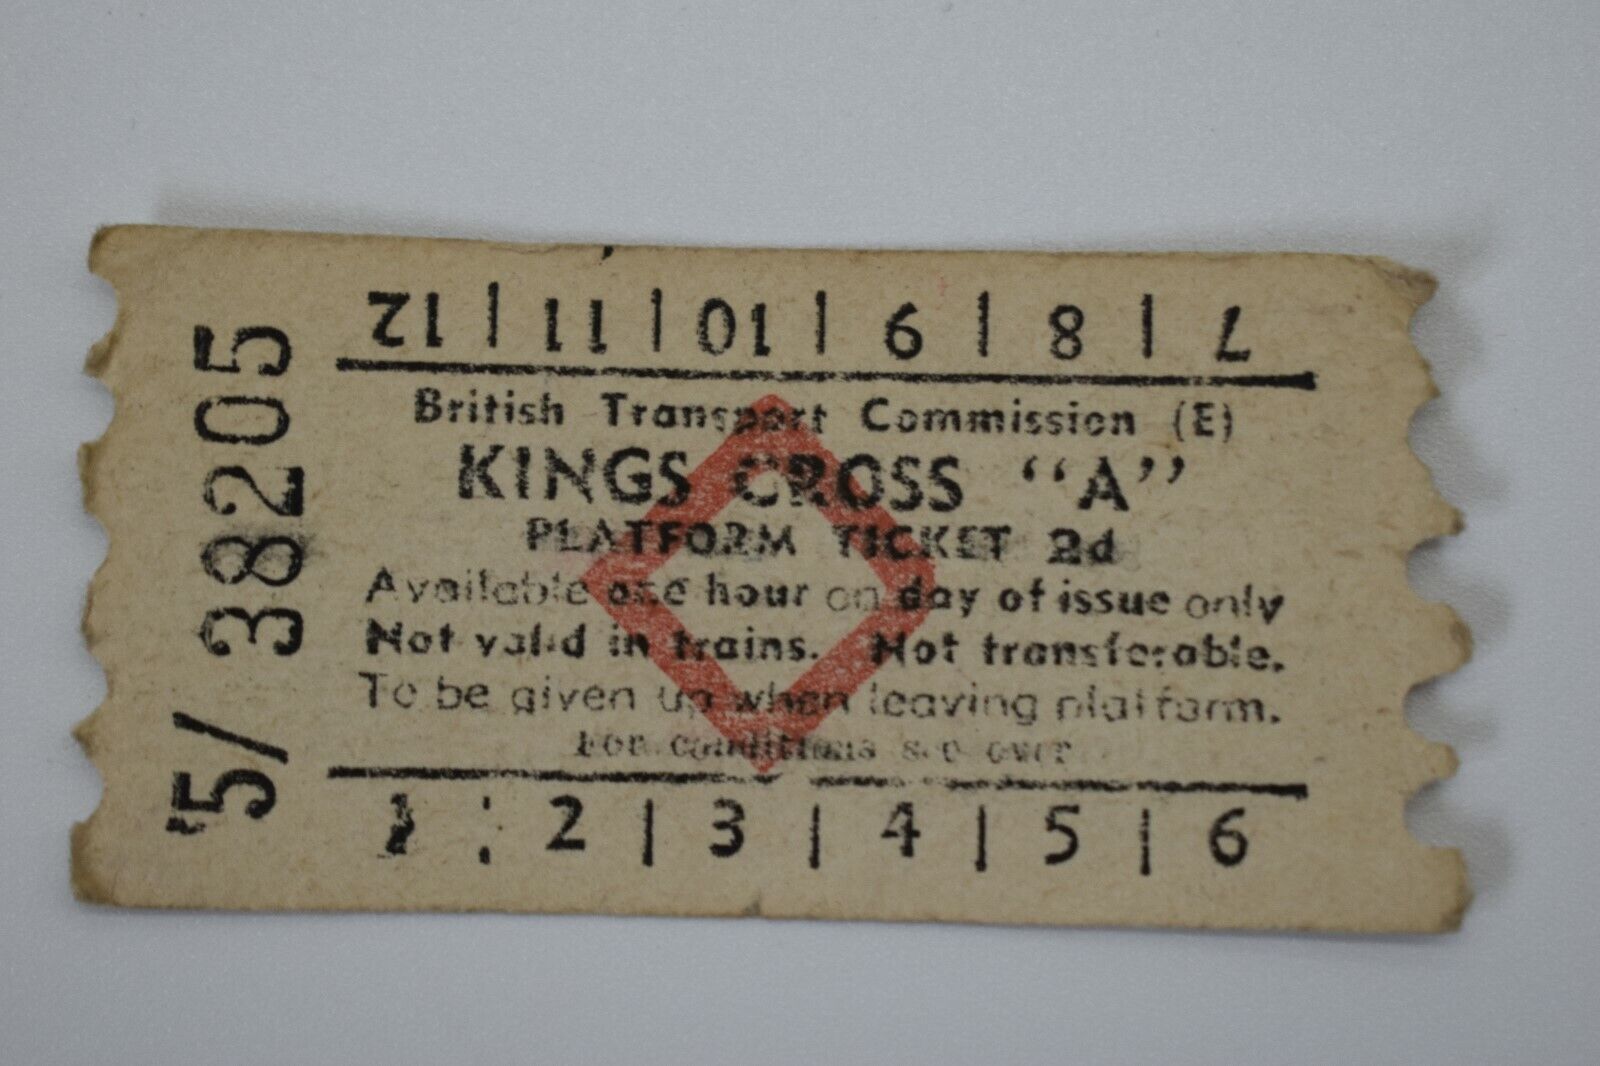 BTC British Railway (E) Platform Ticket No 38205 KINGS CROSS \